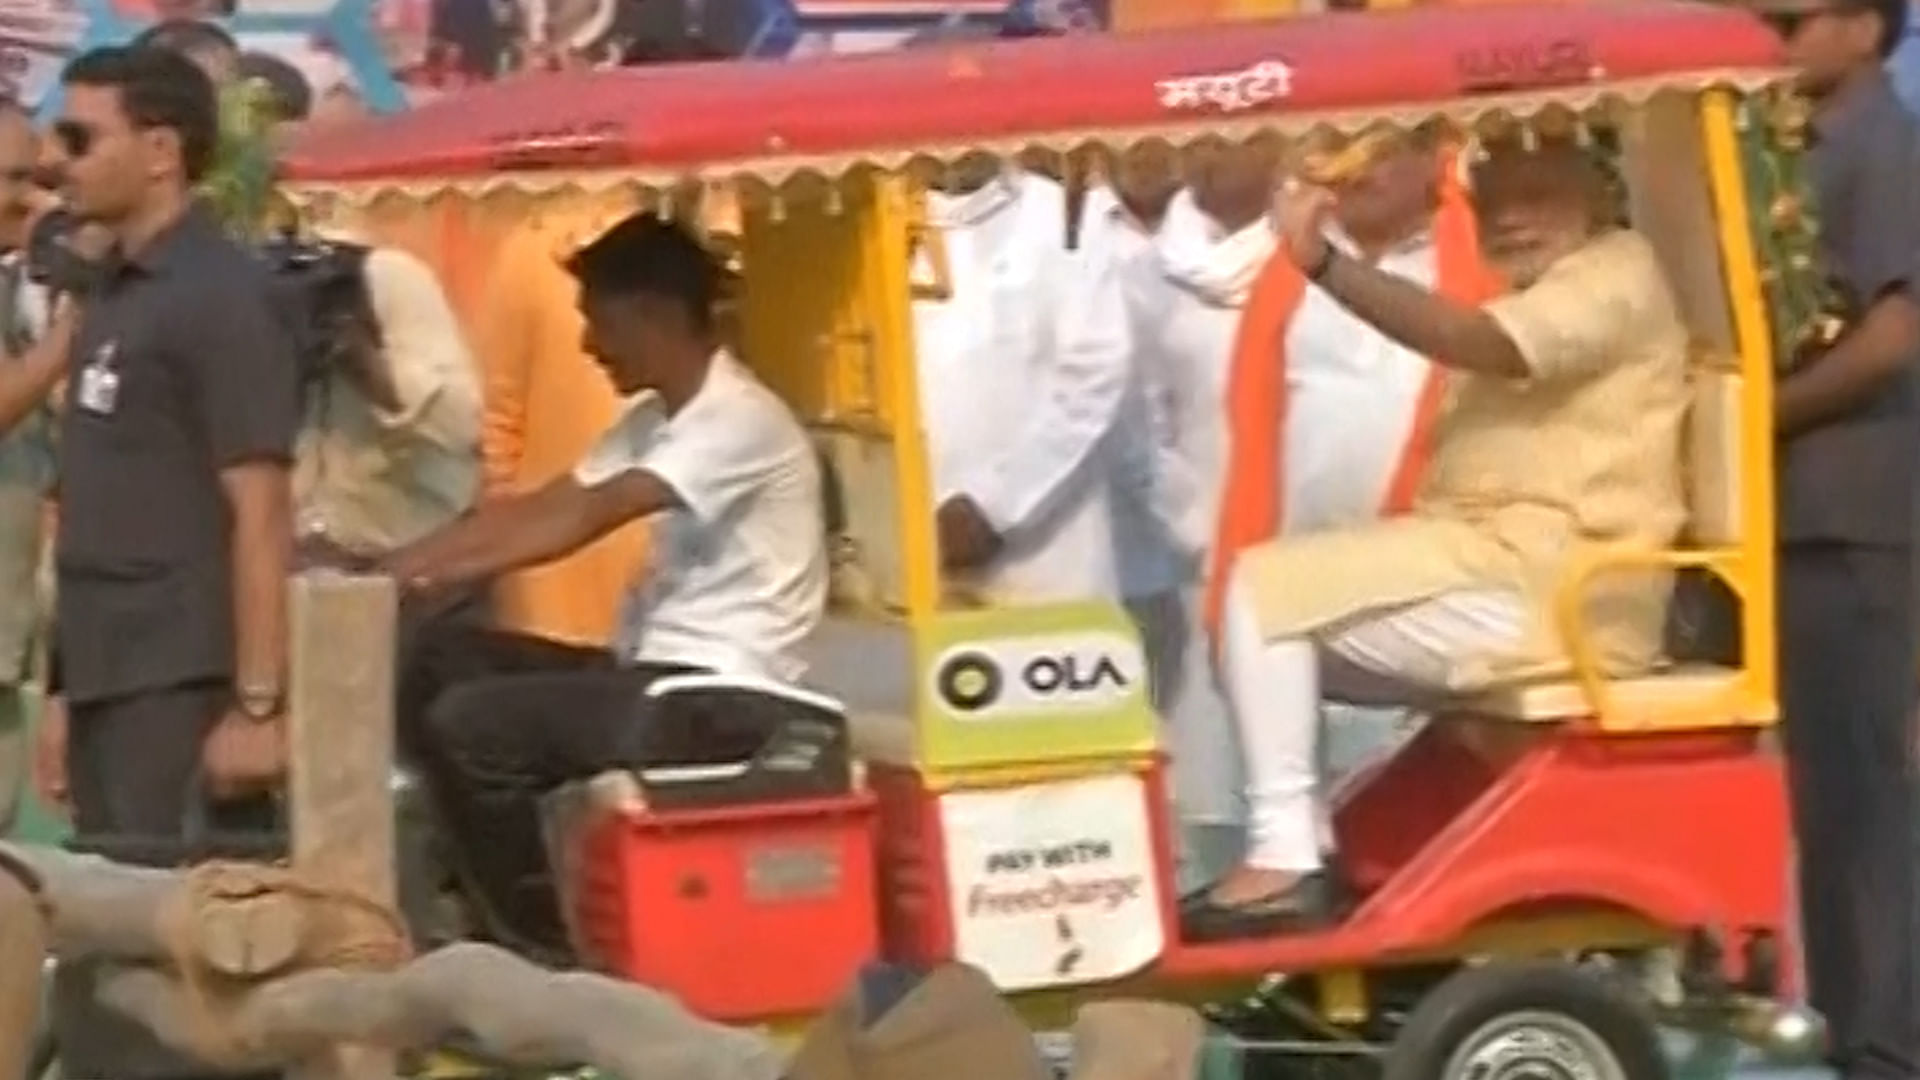 

At the Diesel Locomotive Works (DLW) premises, Modi took an e-rickshaw ride. (Photo: ANI screengrab)